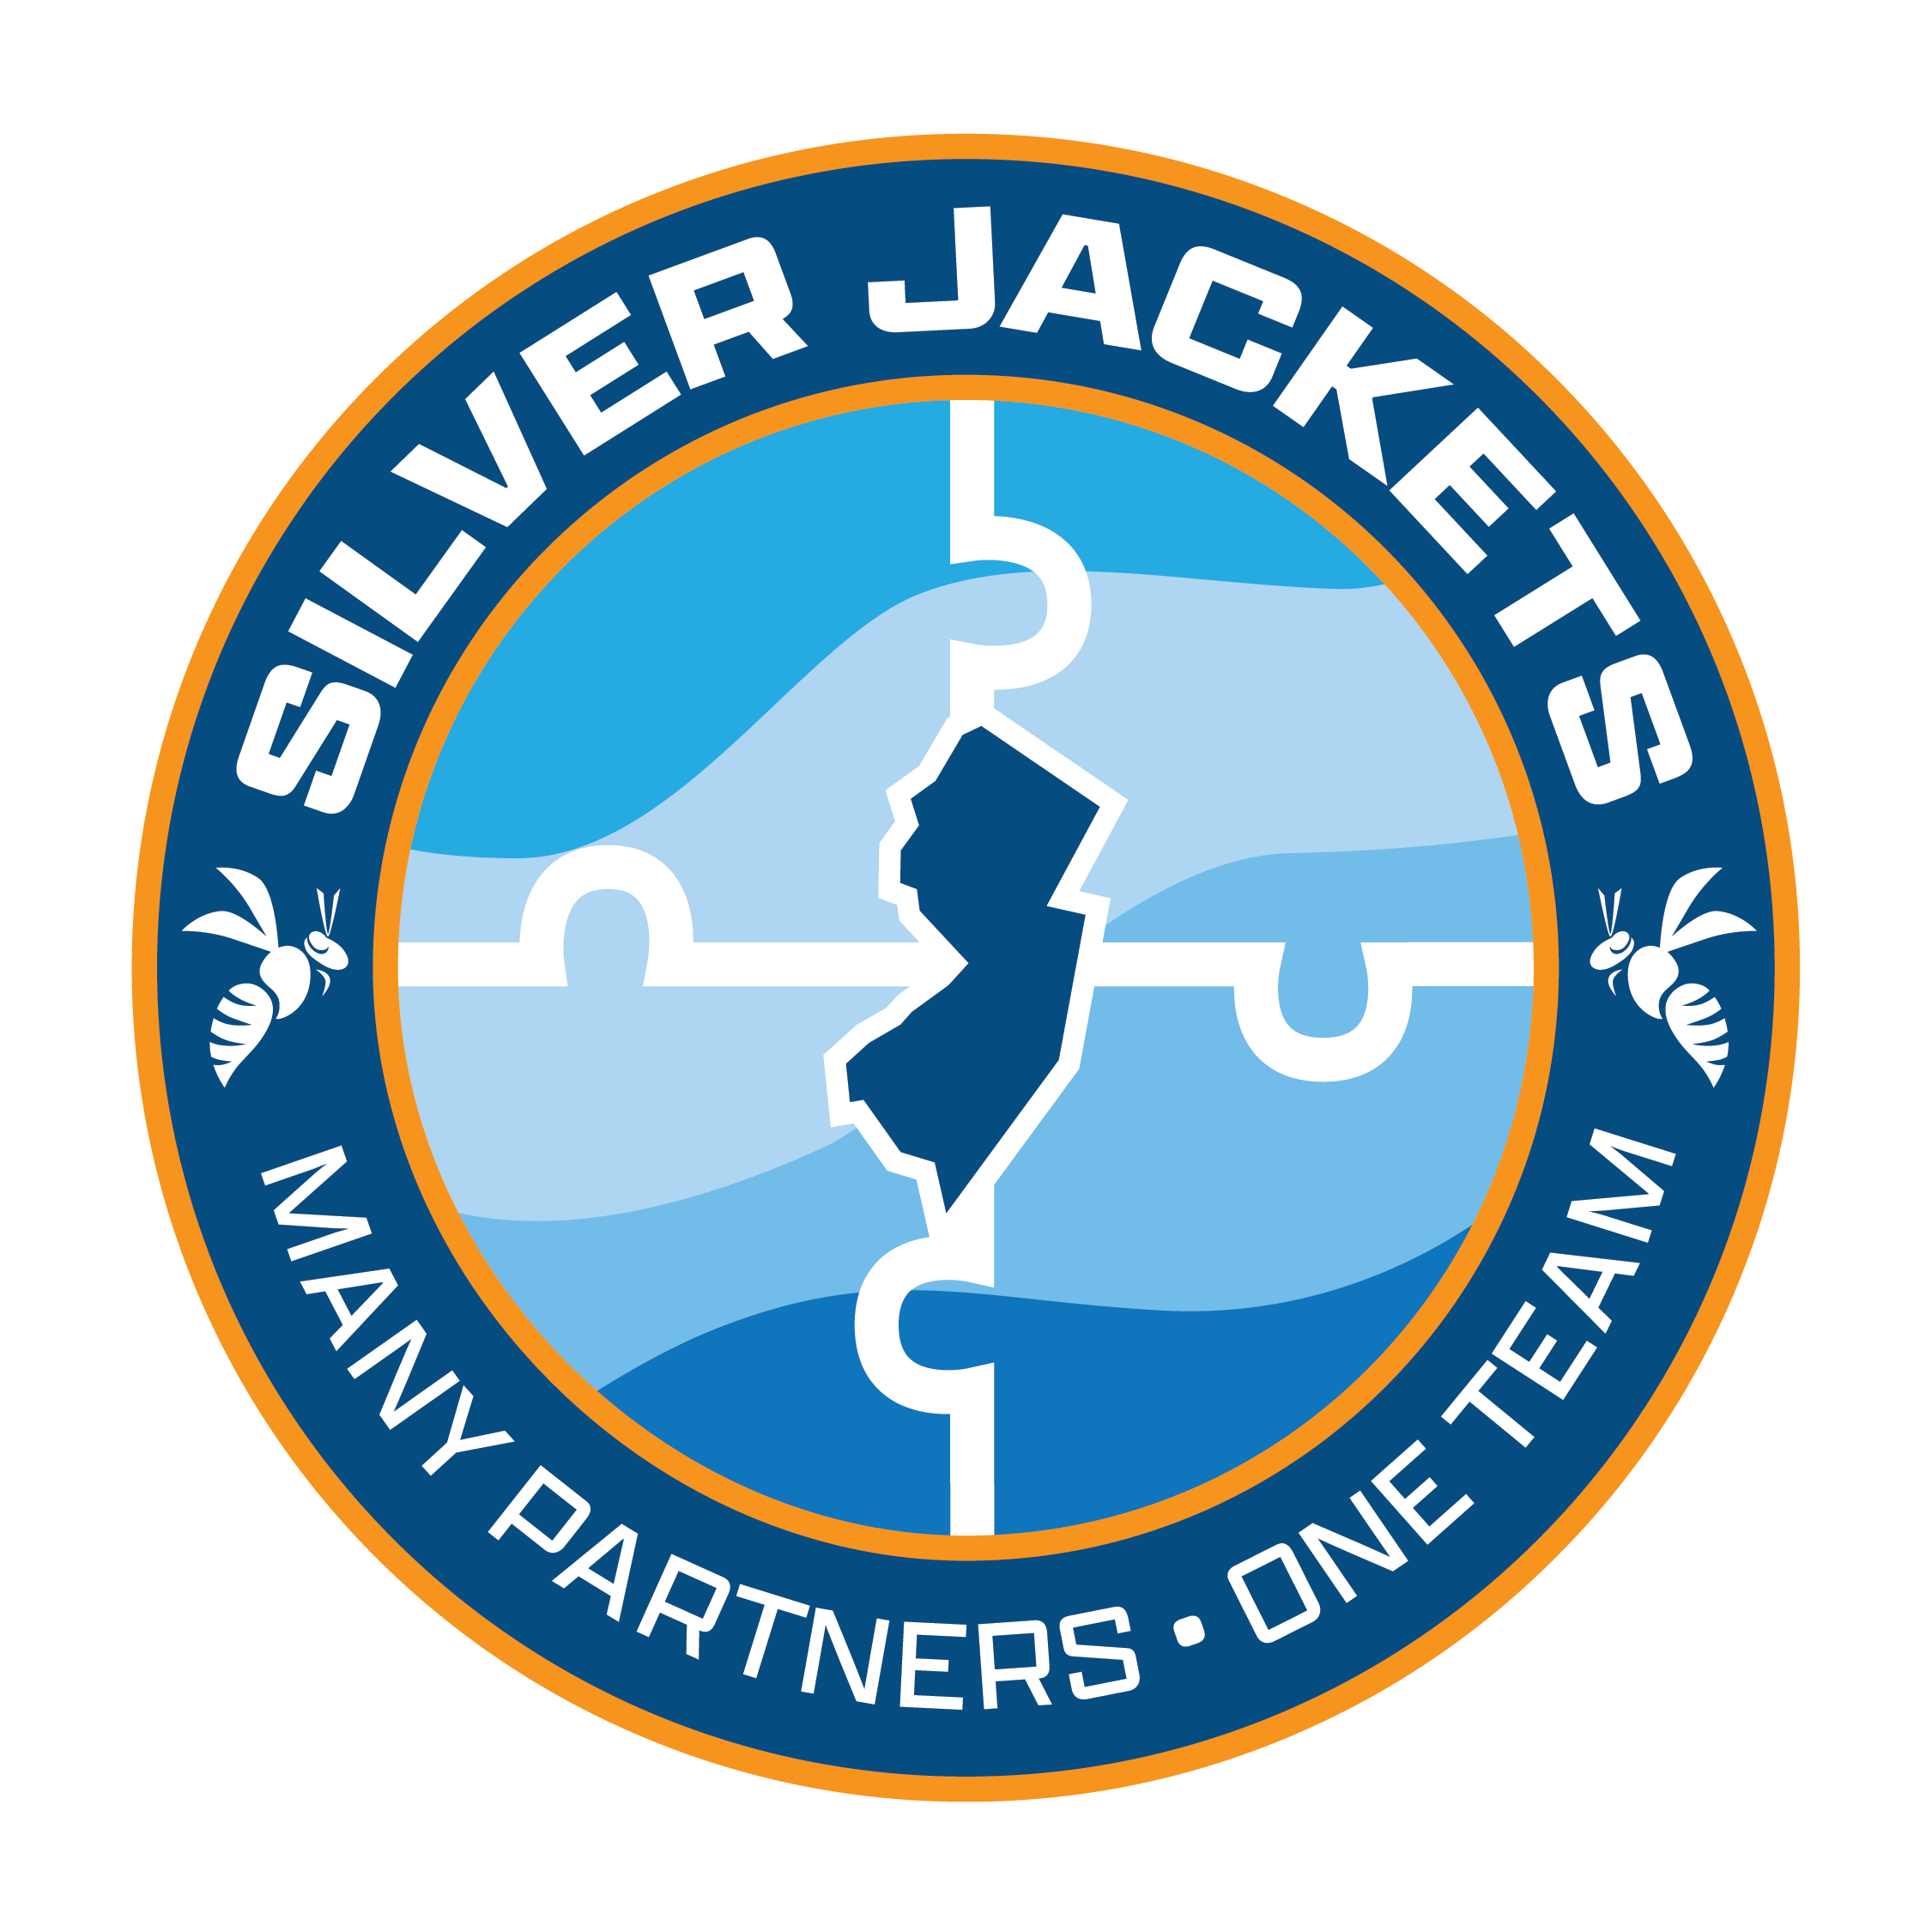 New Jersey Silver Jackets logo